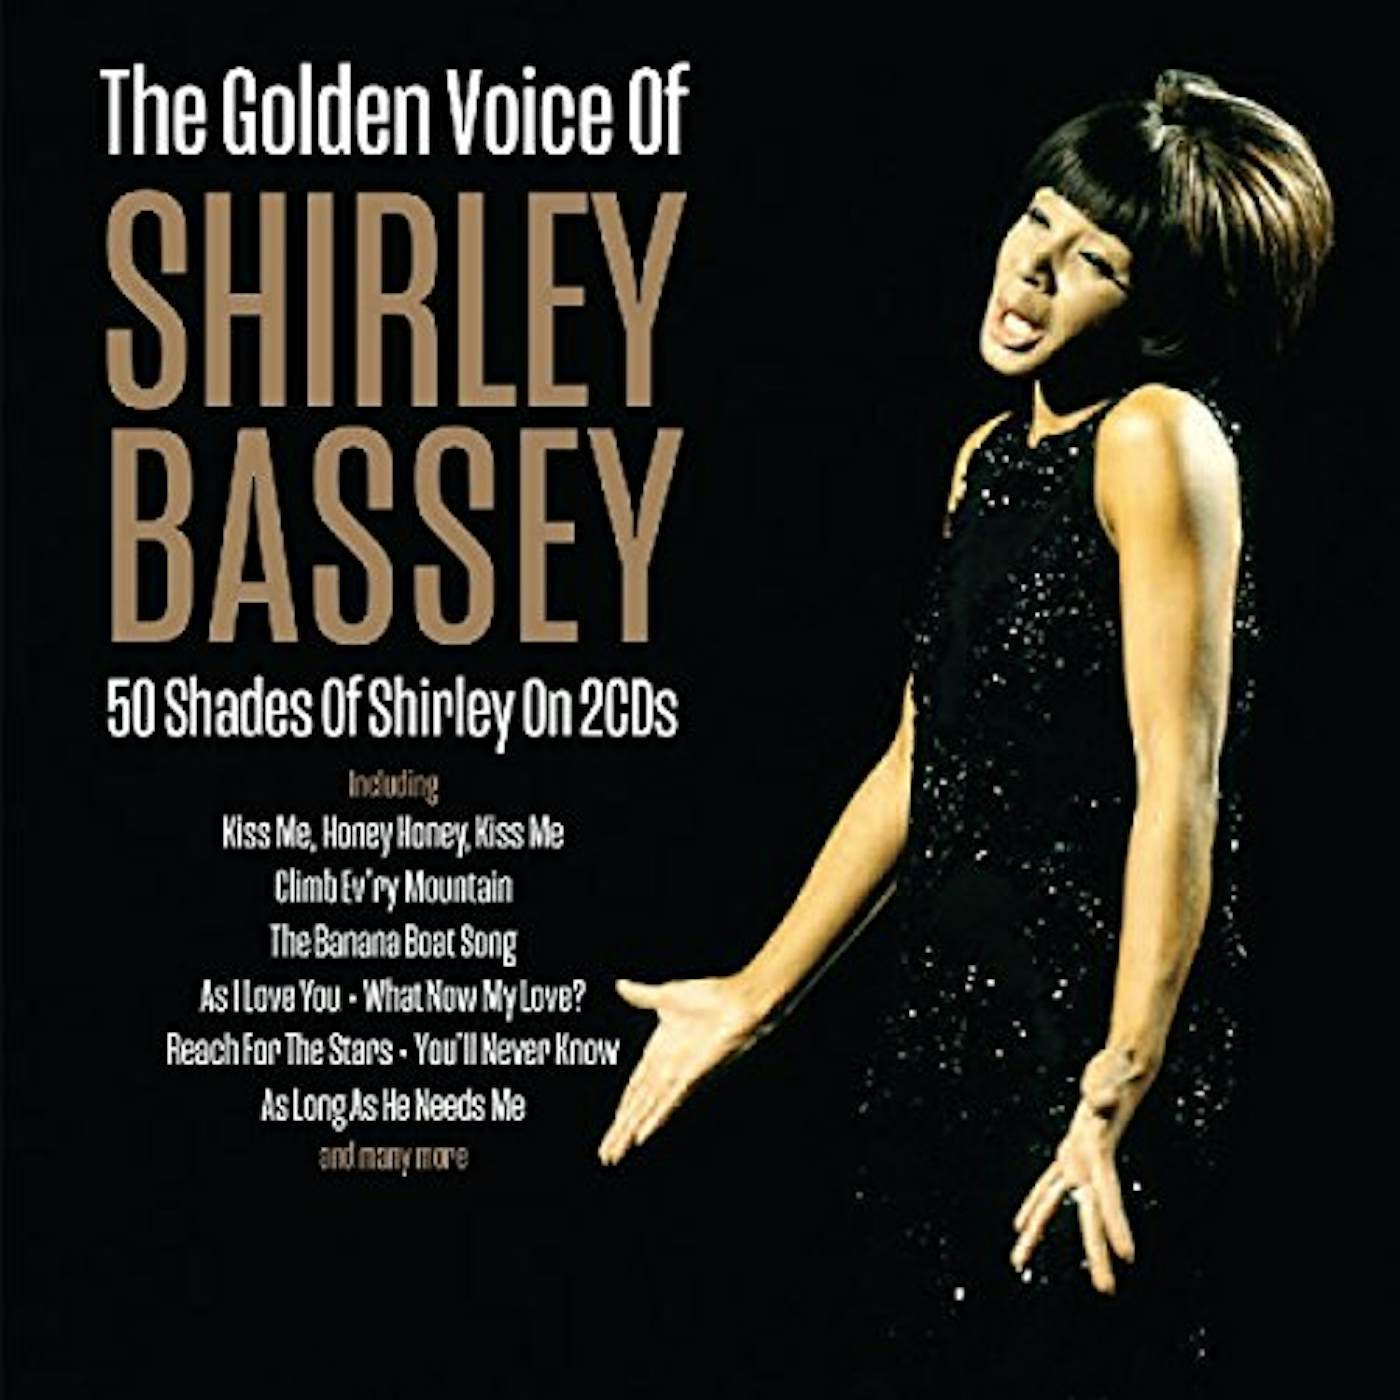 Shirley Bassey GOLDEN VOICE OF CD